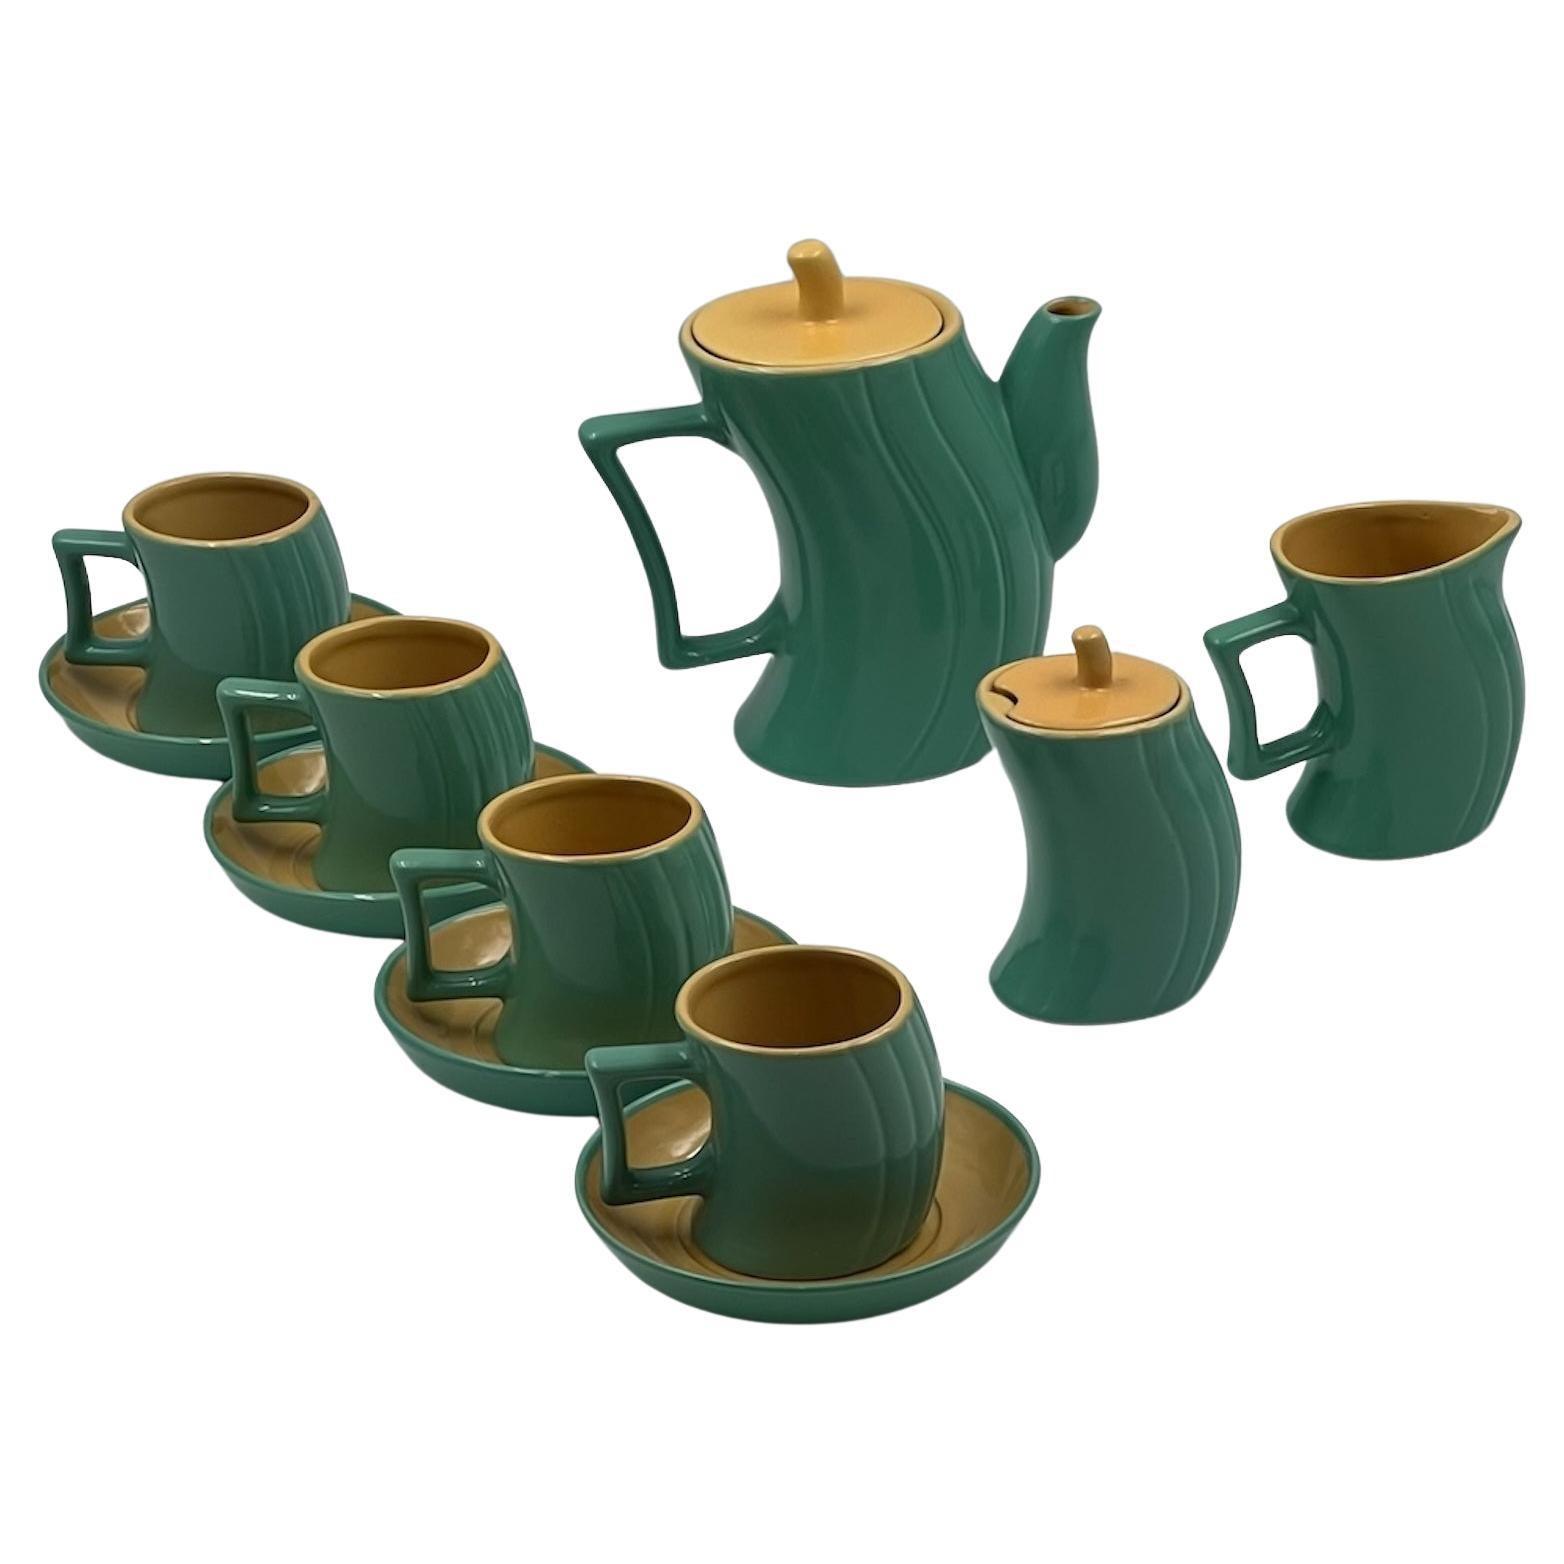 Vintage Memphis Naj Oleari Ceramic Tea Set by Massimo Iosa Ghini - 1980s For Sale